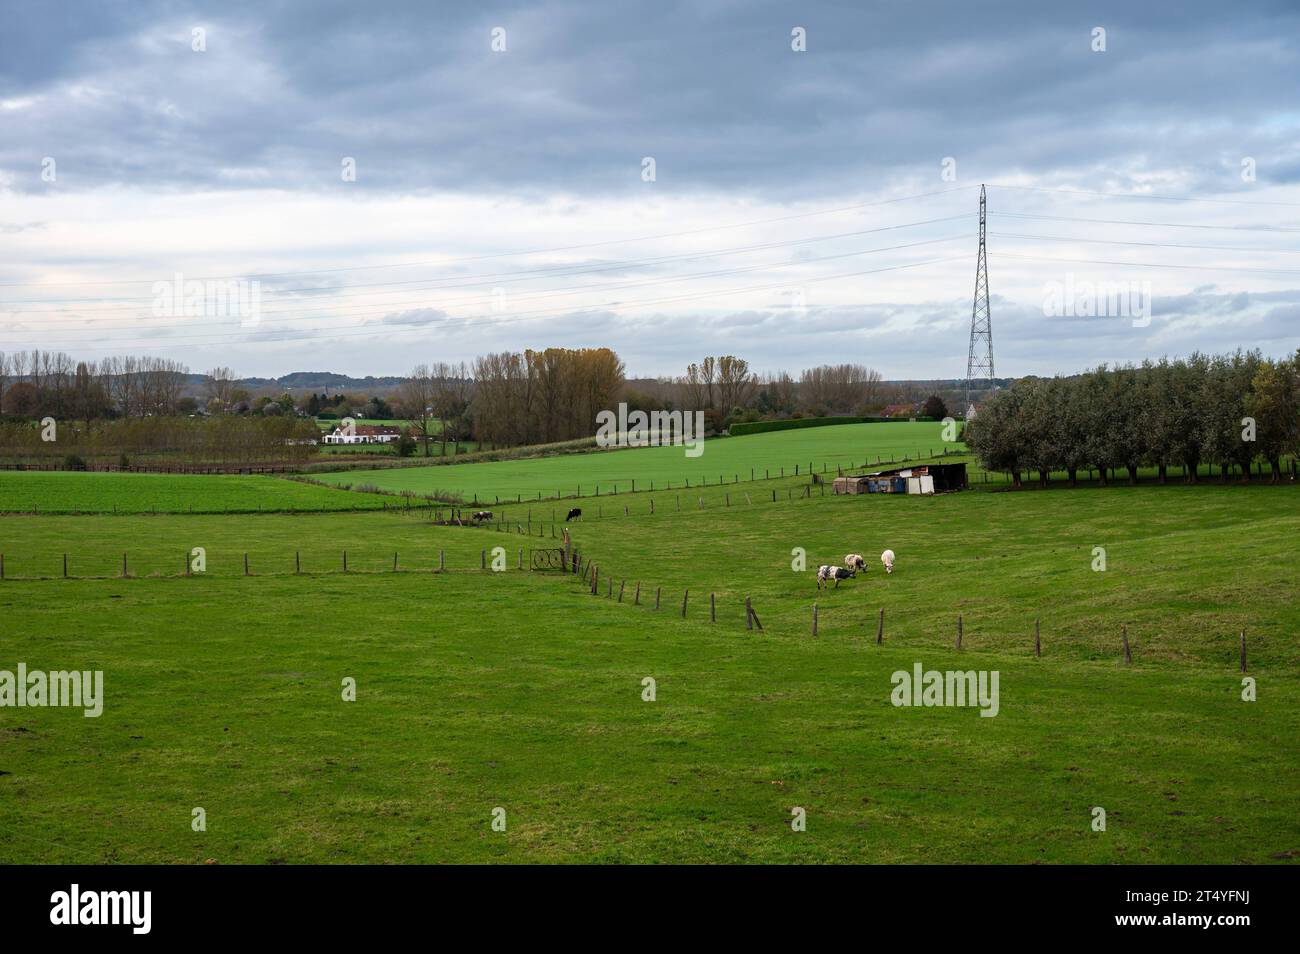 Cows grazing at the green hills of the Vogelzang nature reserve Neerpede, Anderlecht, belgium Credit: Imago/Alamy Live News Stock Photo